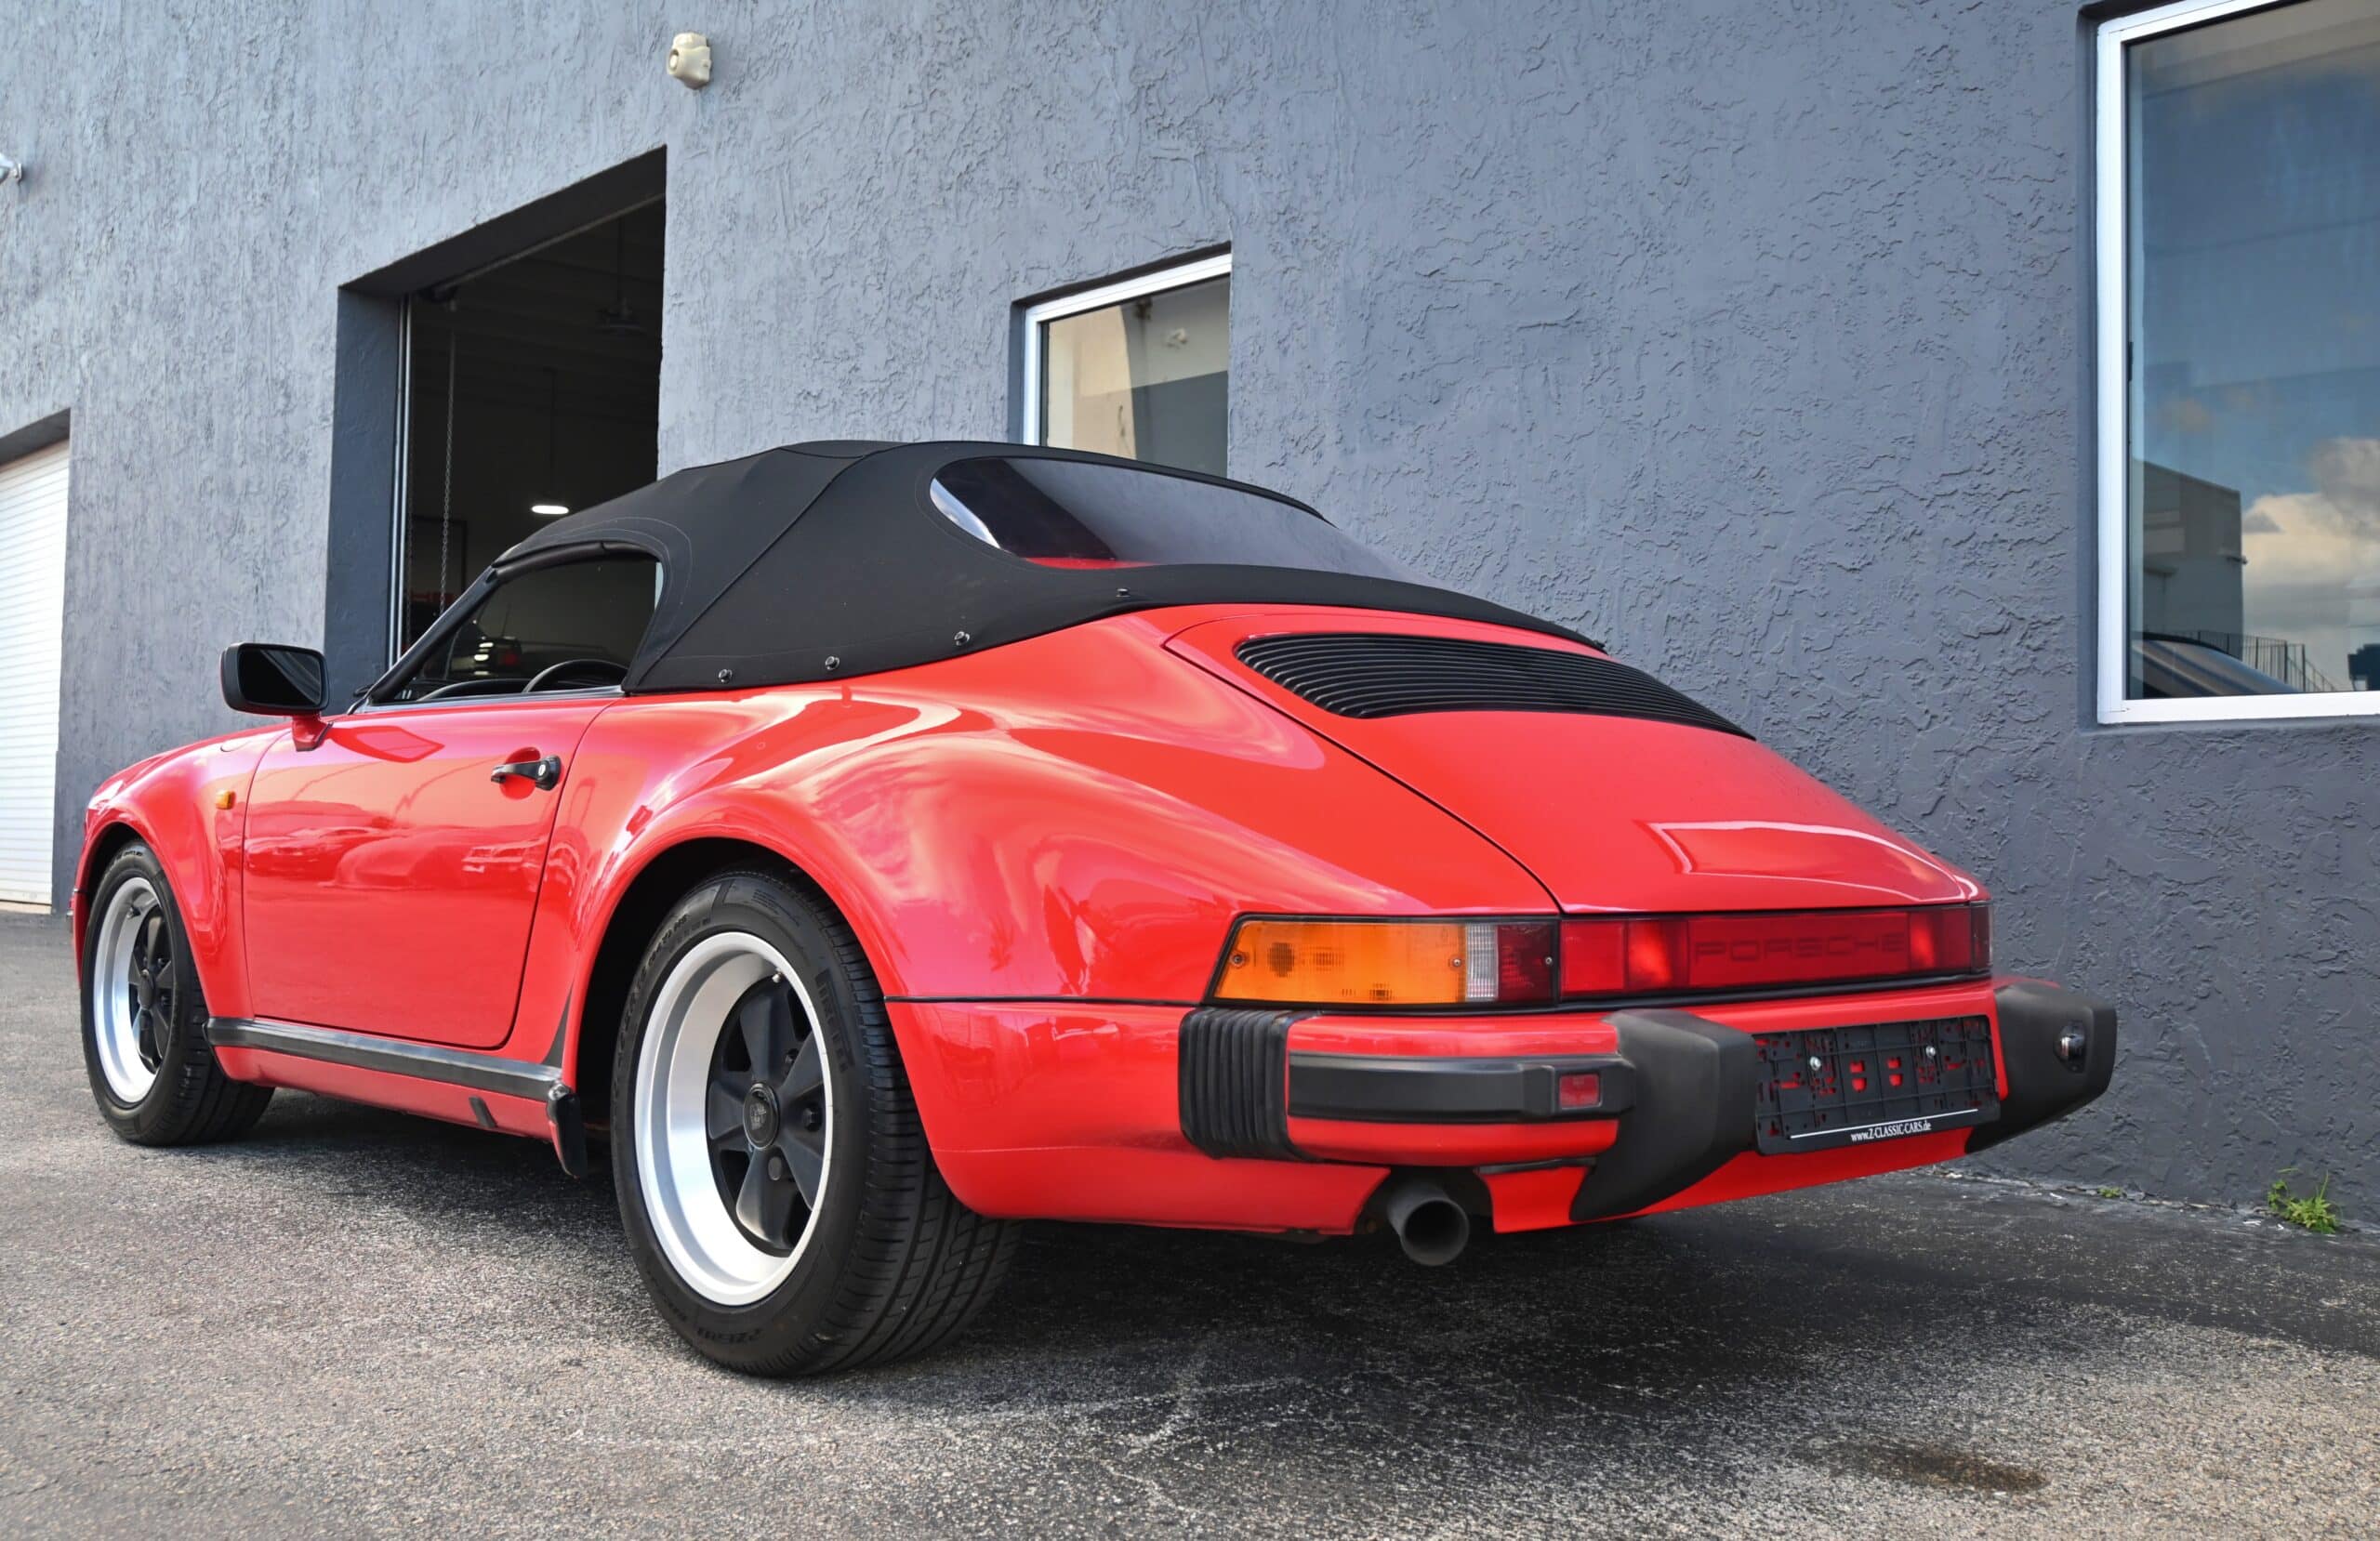 1989 Porsche 911 Speedster Euro -Factory Widebody -Only 33k Miles – Sport Seats – Unmodified – All original